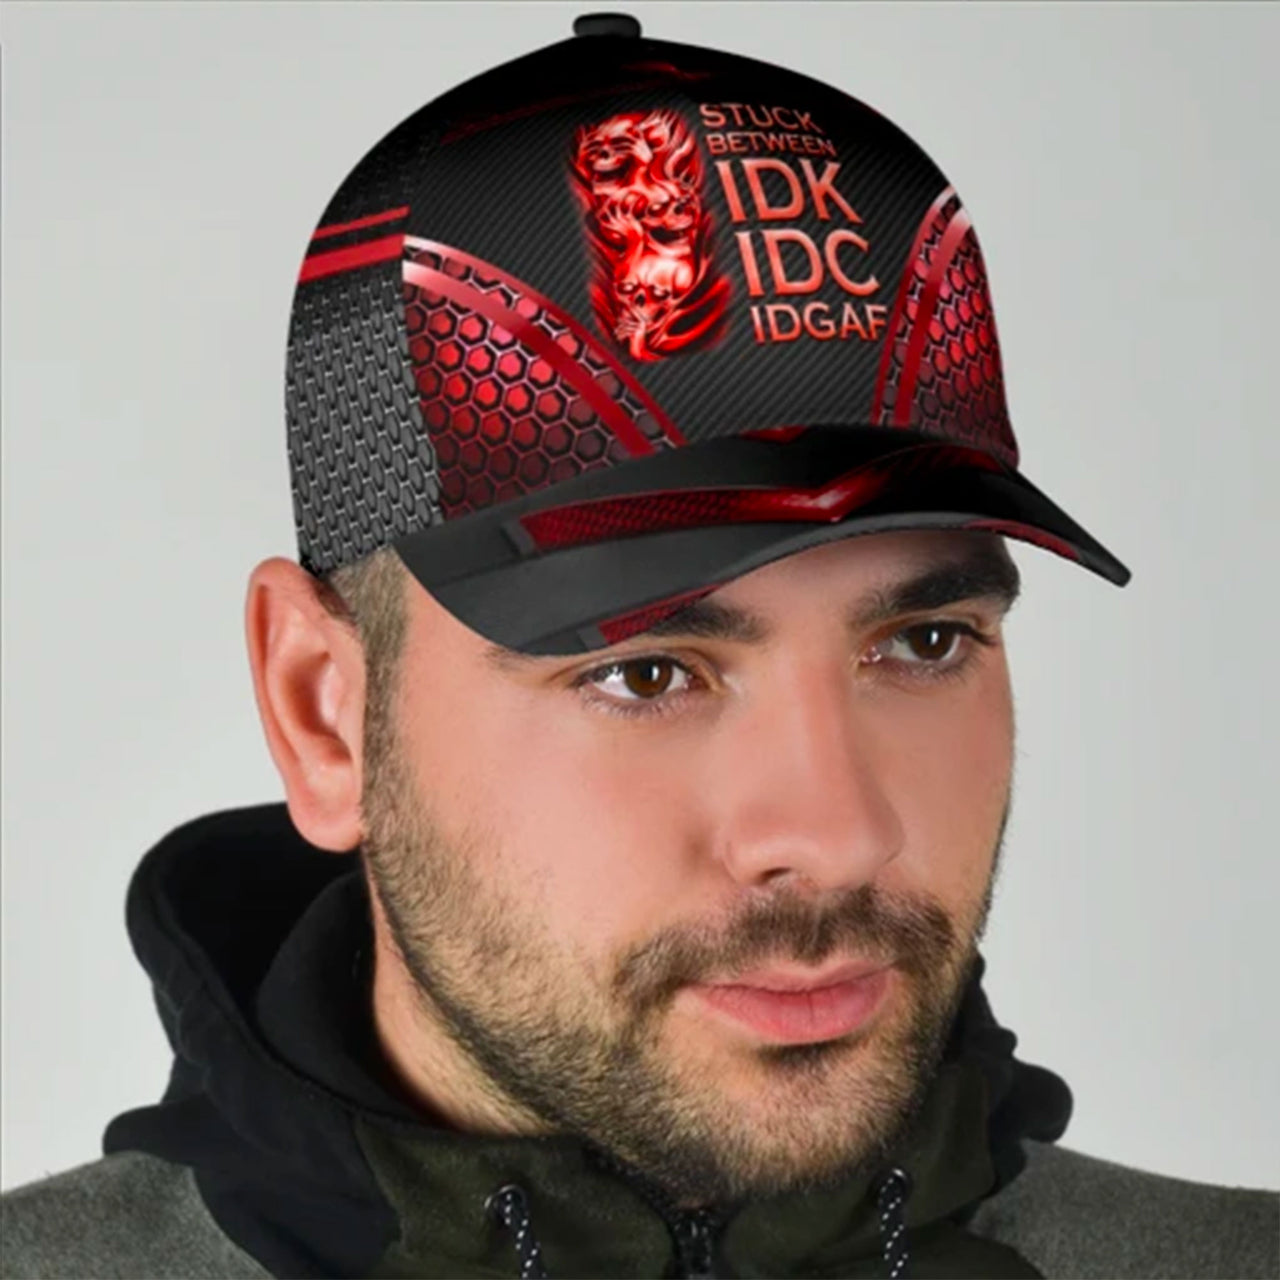 Skull Stuck Between IDK IDC and IDGAF Custom Hats for Men & Women 3D Prints Personalized Baseball Caps